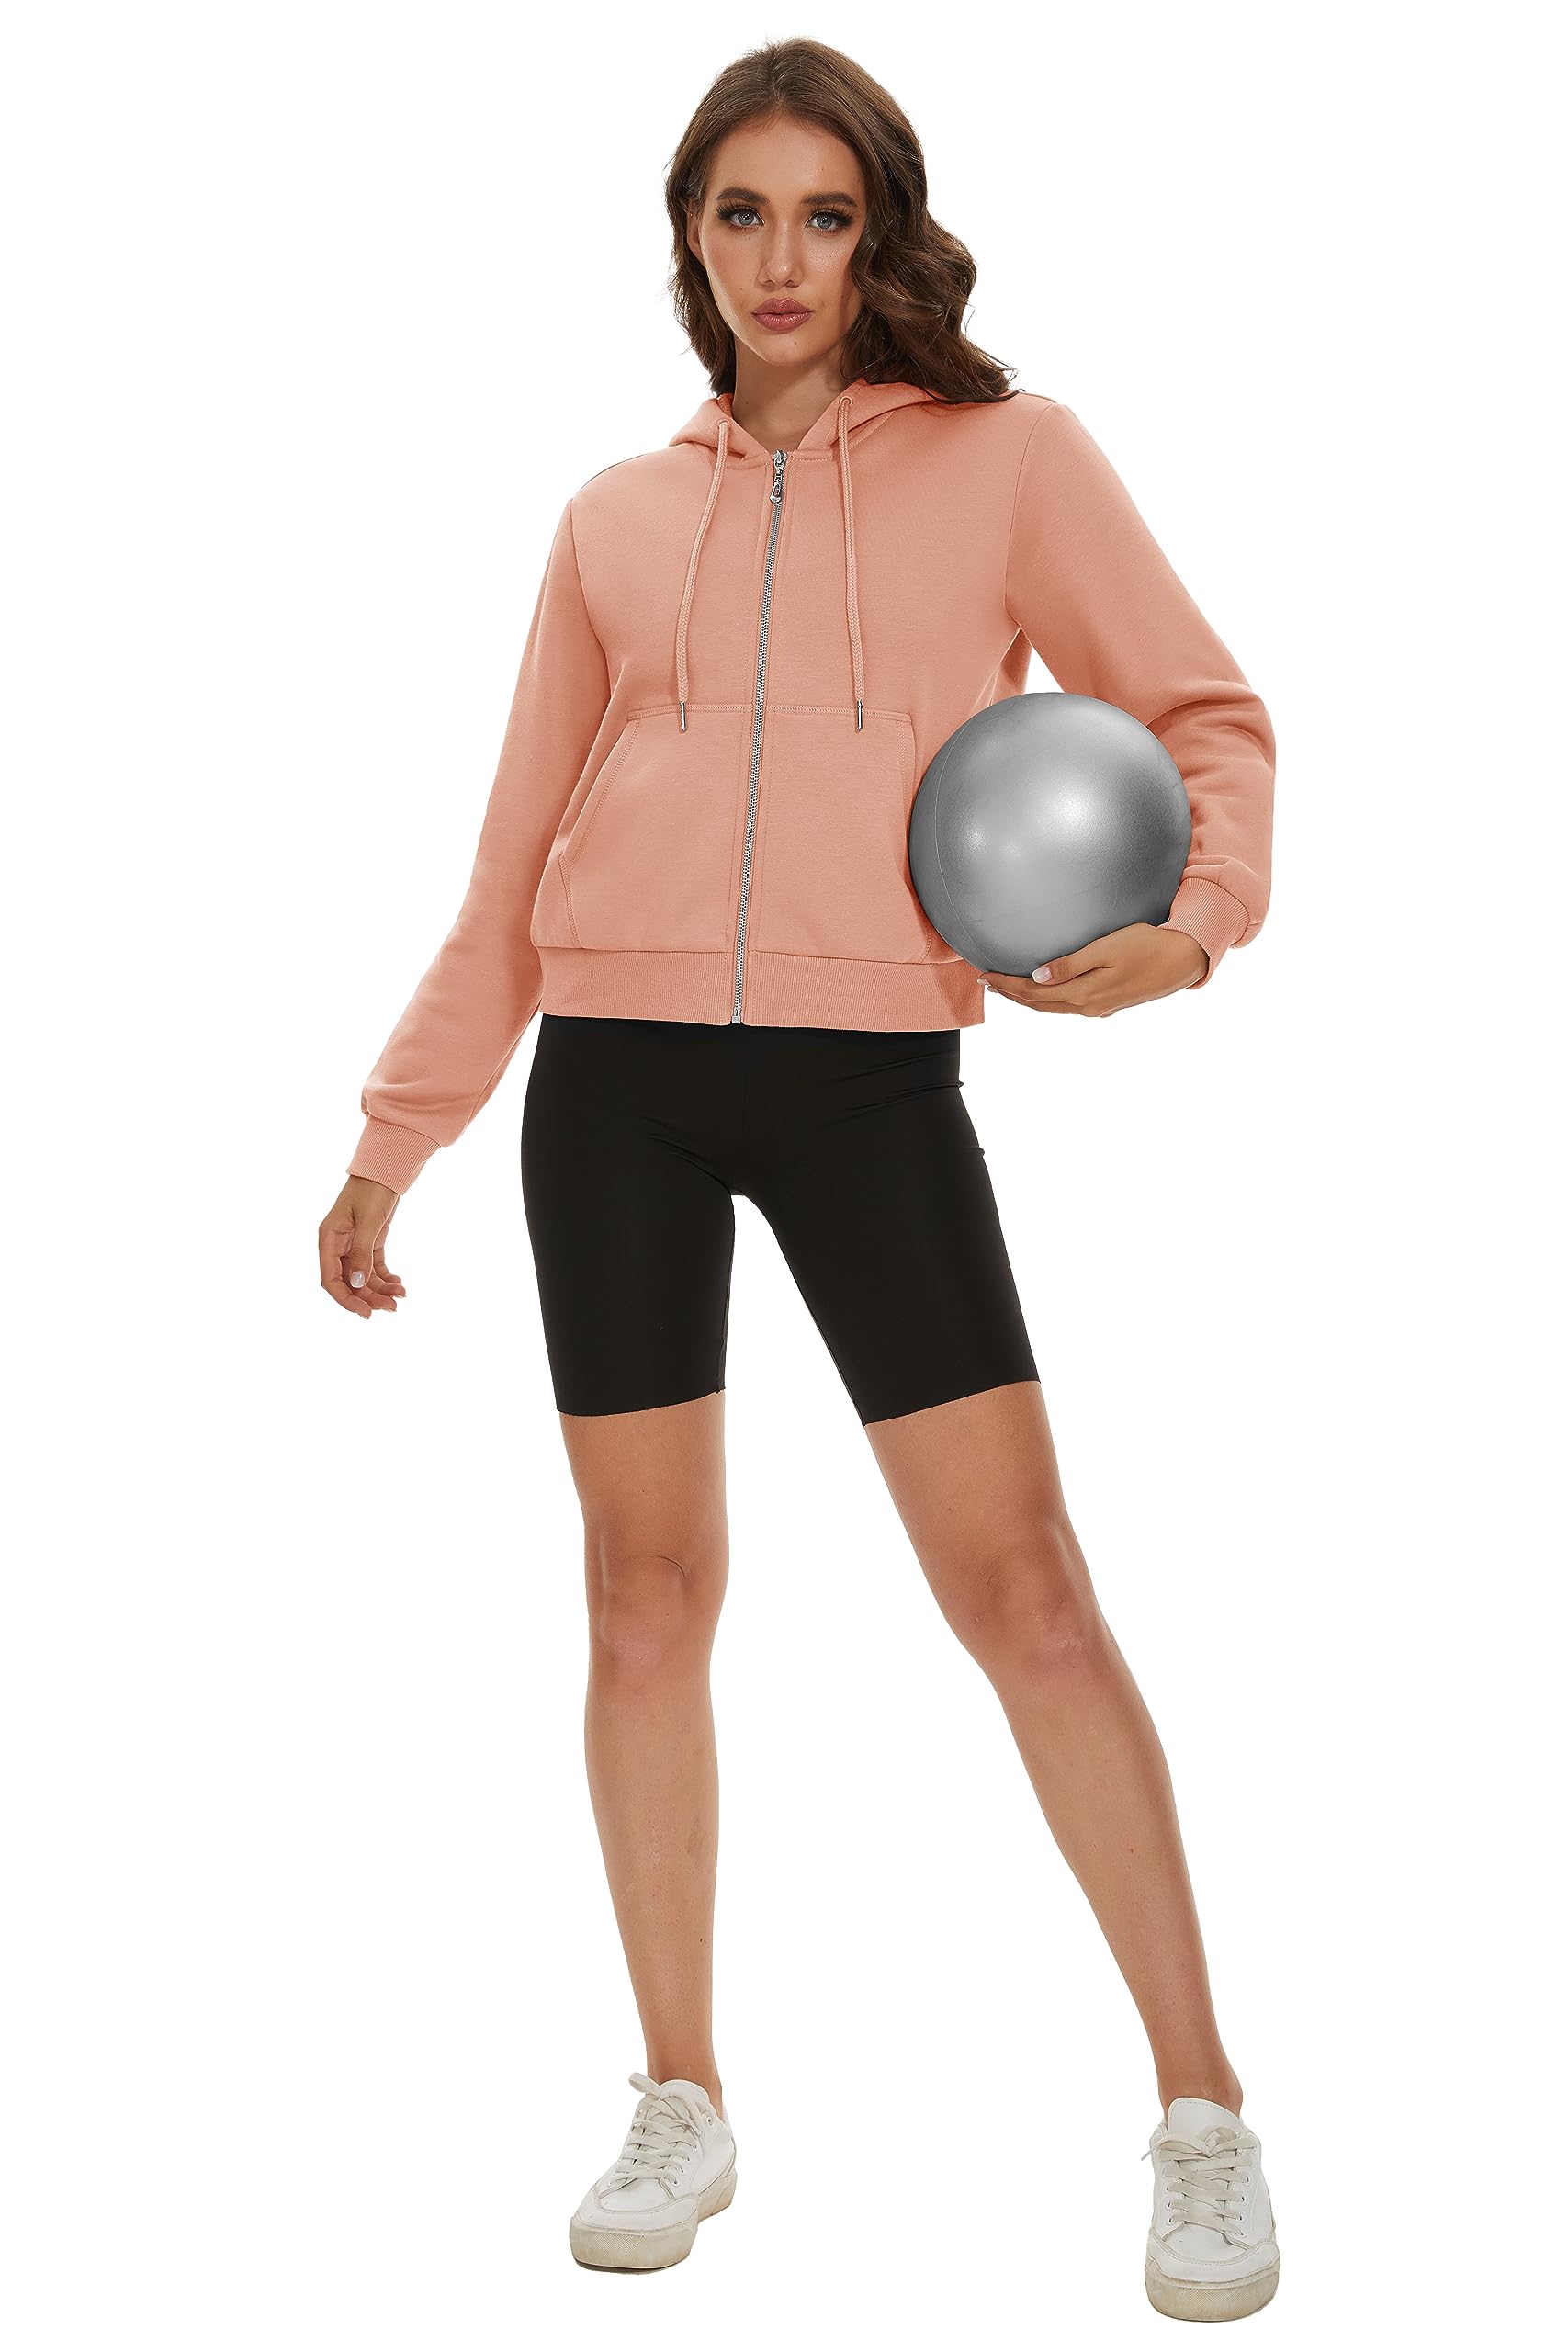 MAGCOMSEN Zip Up Hoodie Women Cropped Sweatshirt Fleece Lined Jacket Athletic Apricot L